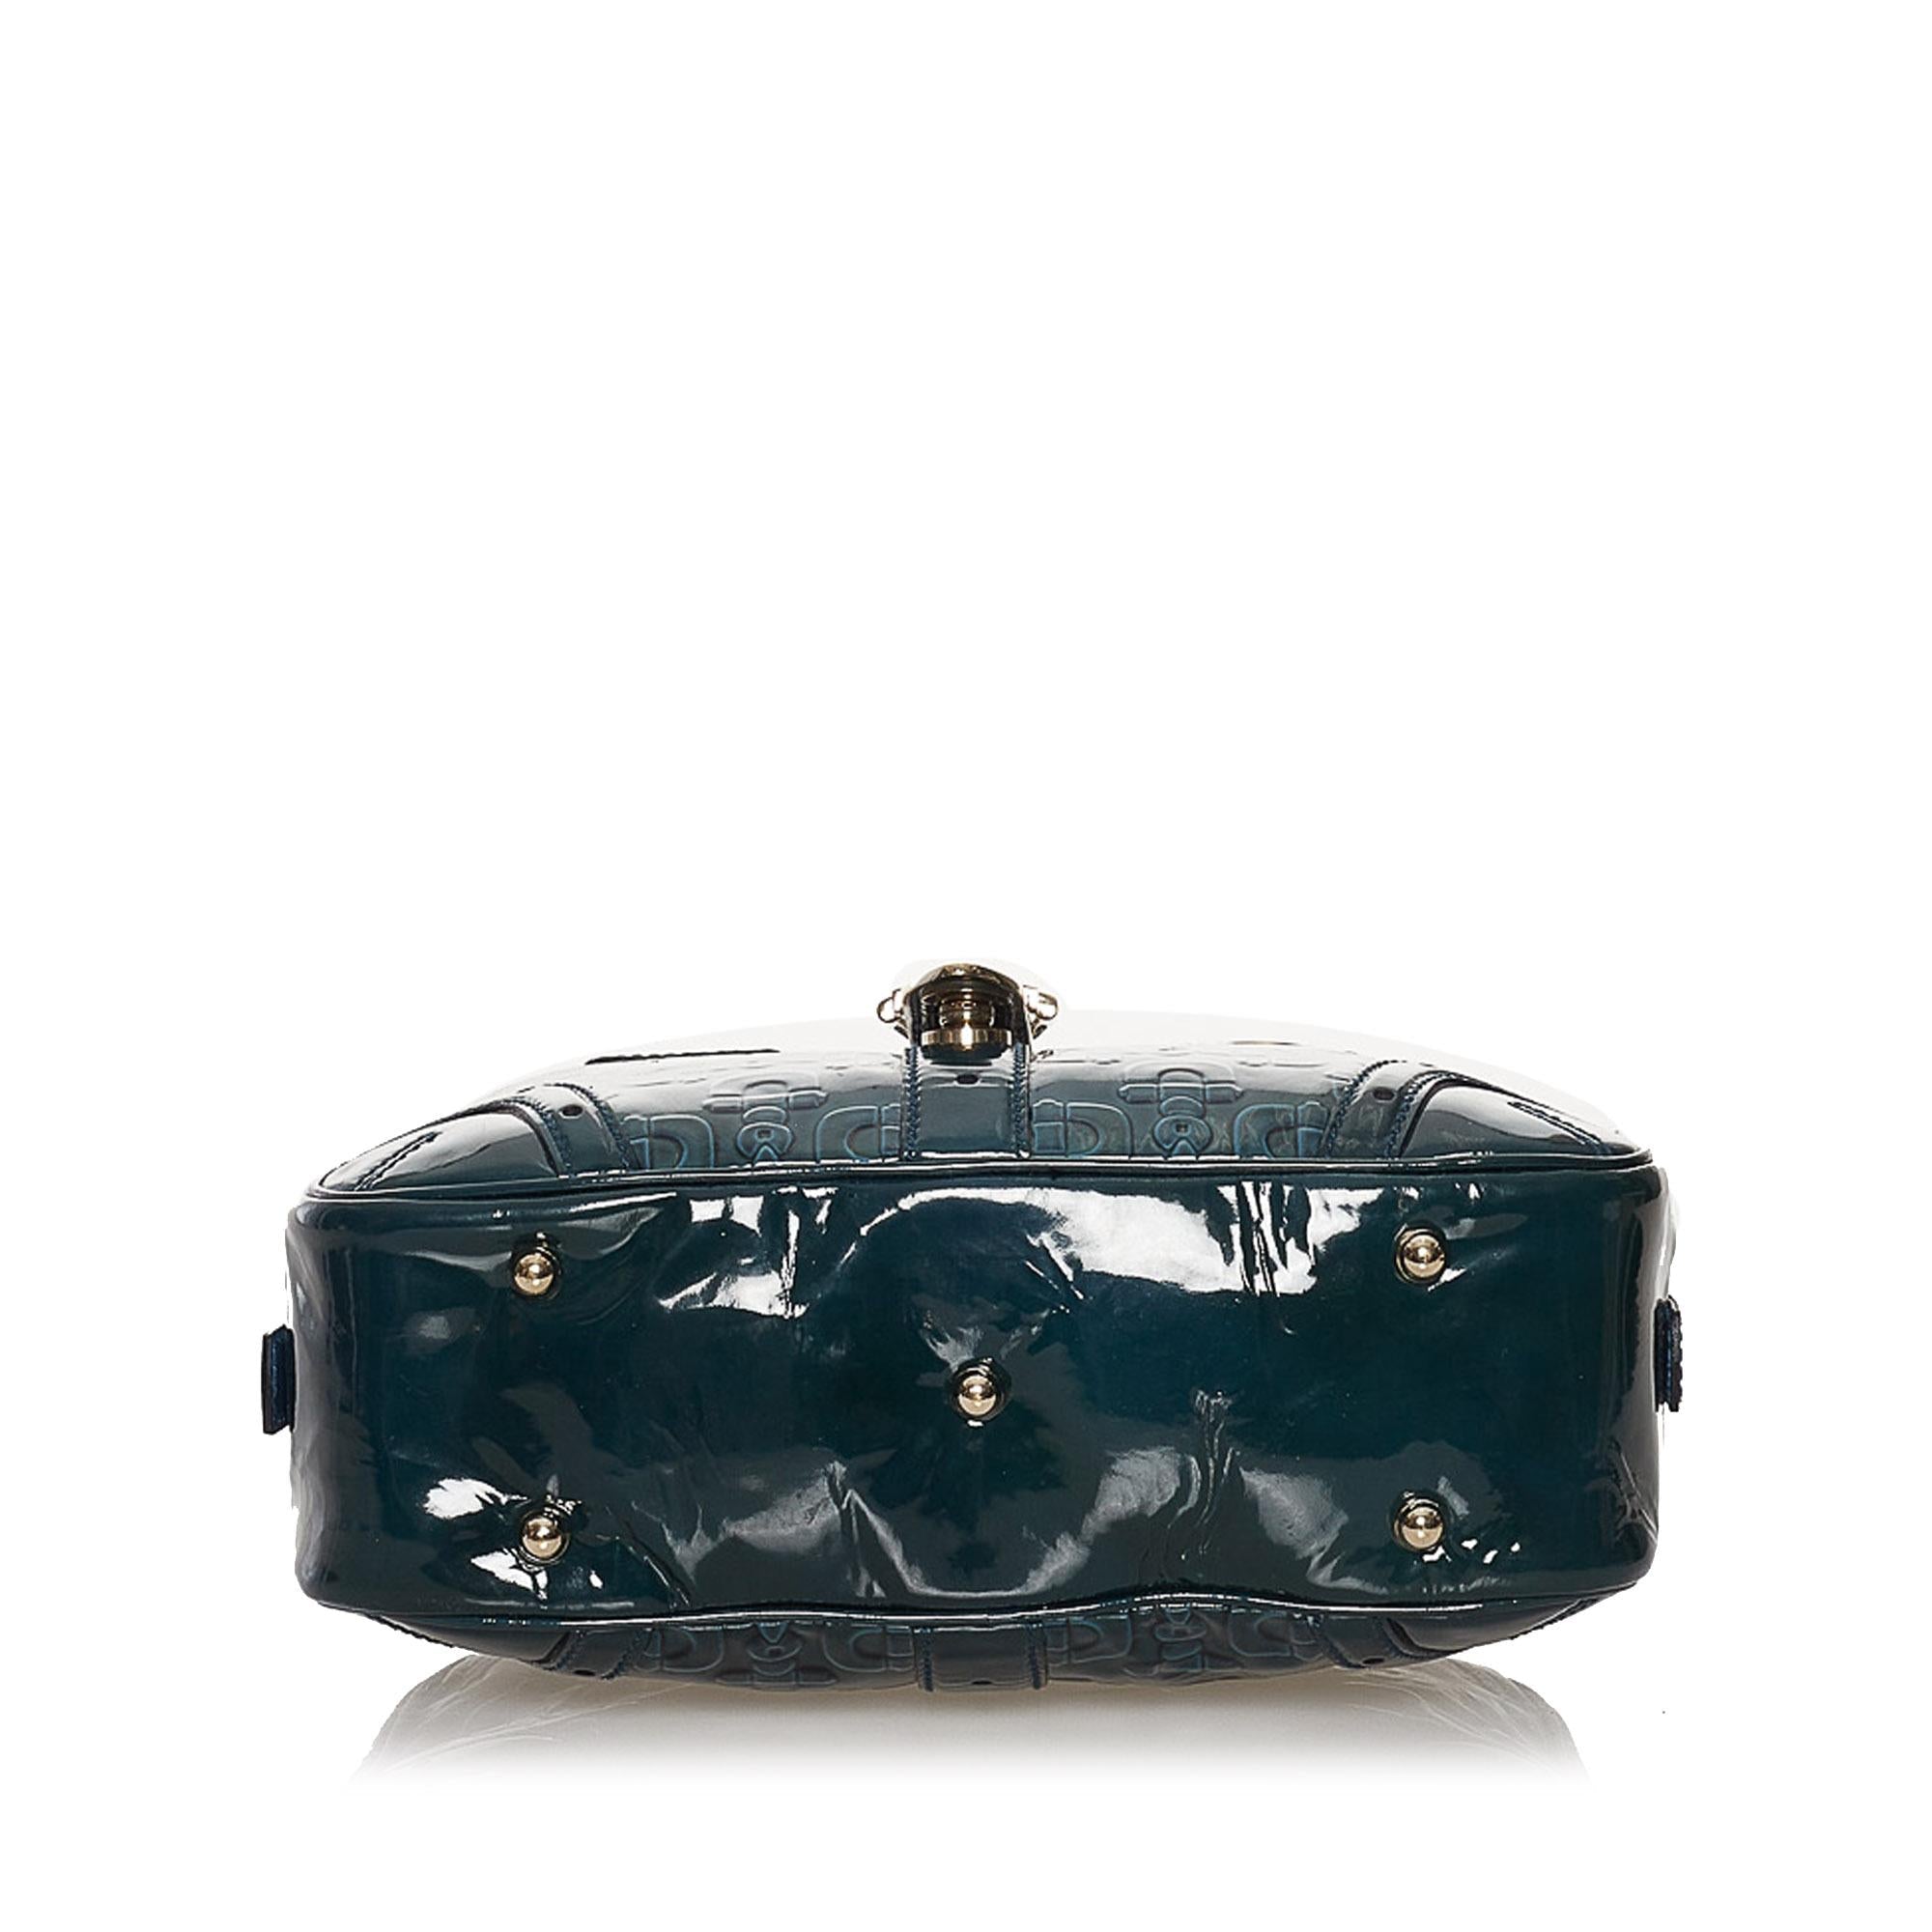 Gucci Horsebit Patent Leather Handbag